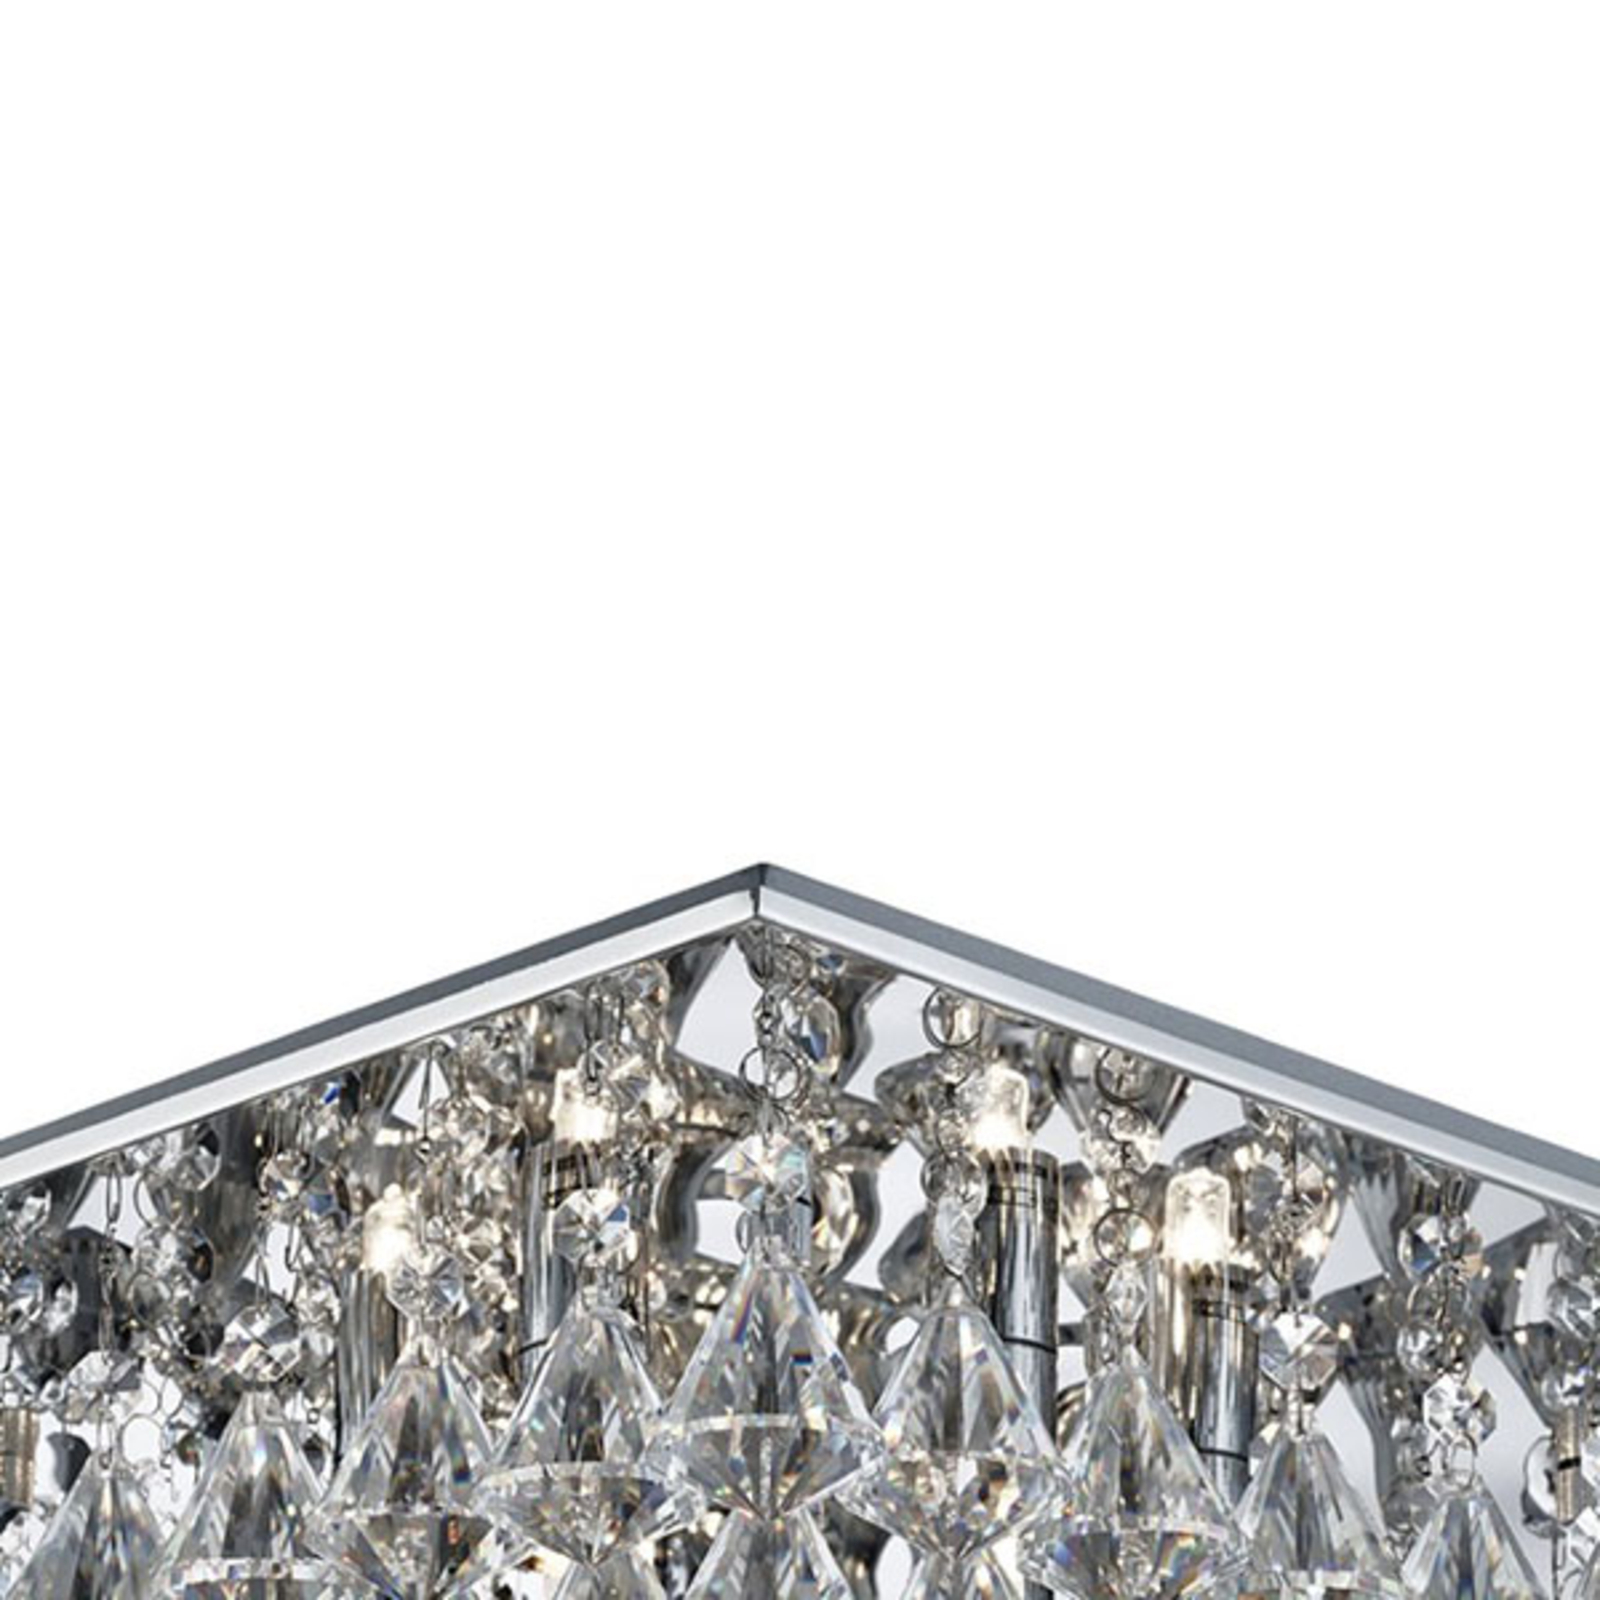 Hanna ceiling light with crystal prisms 44 x 44 cm